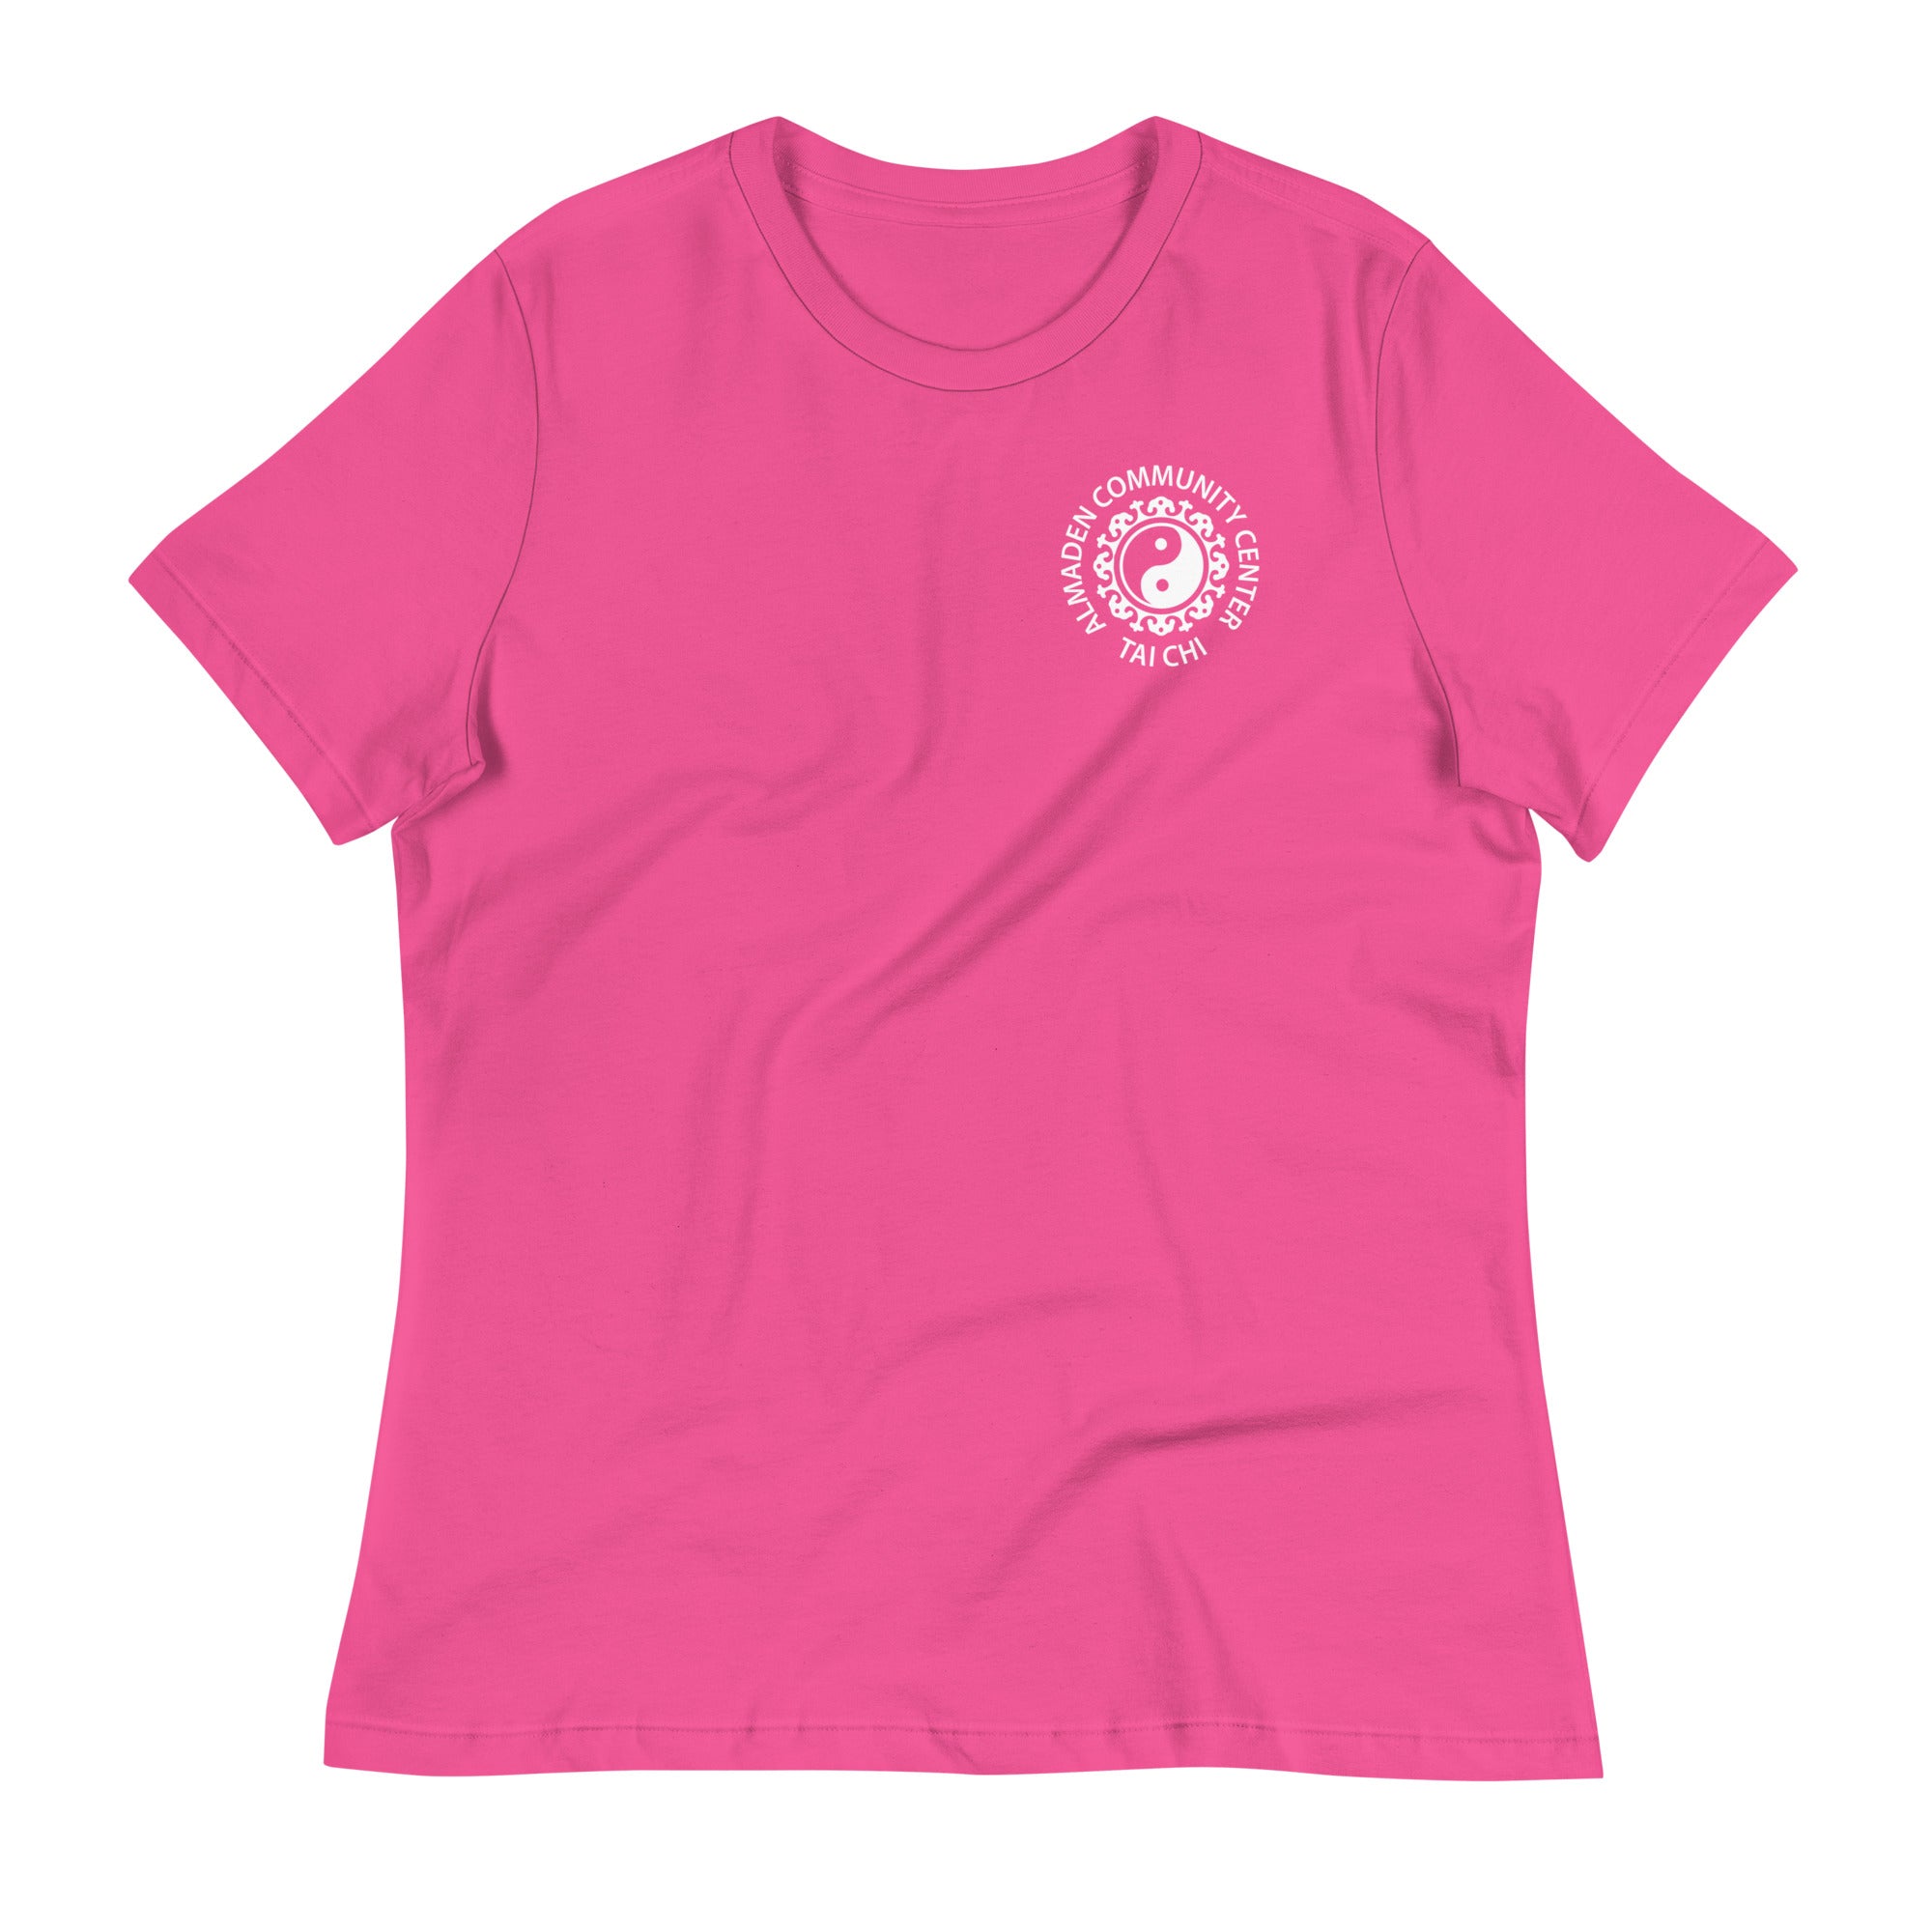 Almaden Community Center Tai Chi Small Logo Women's Relaxed Cut T-Shirt